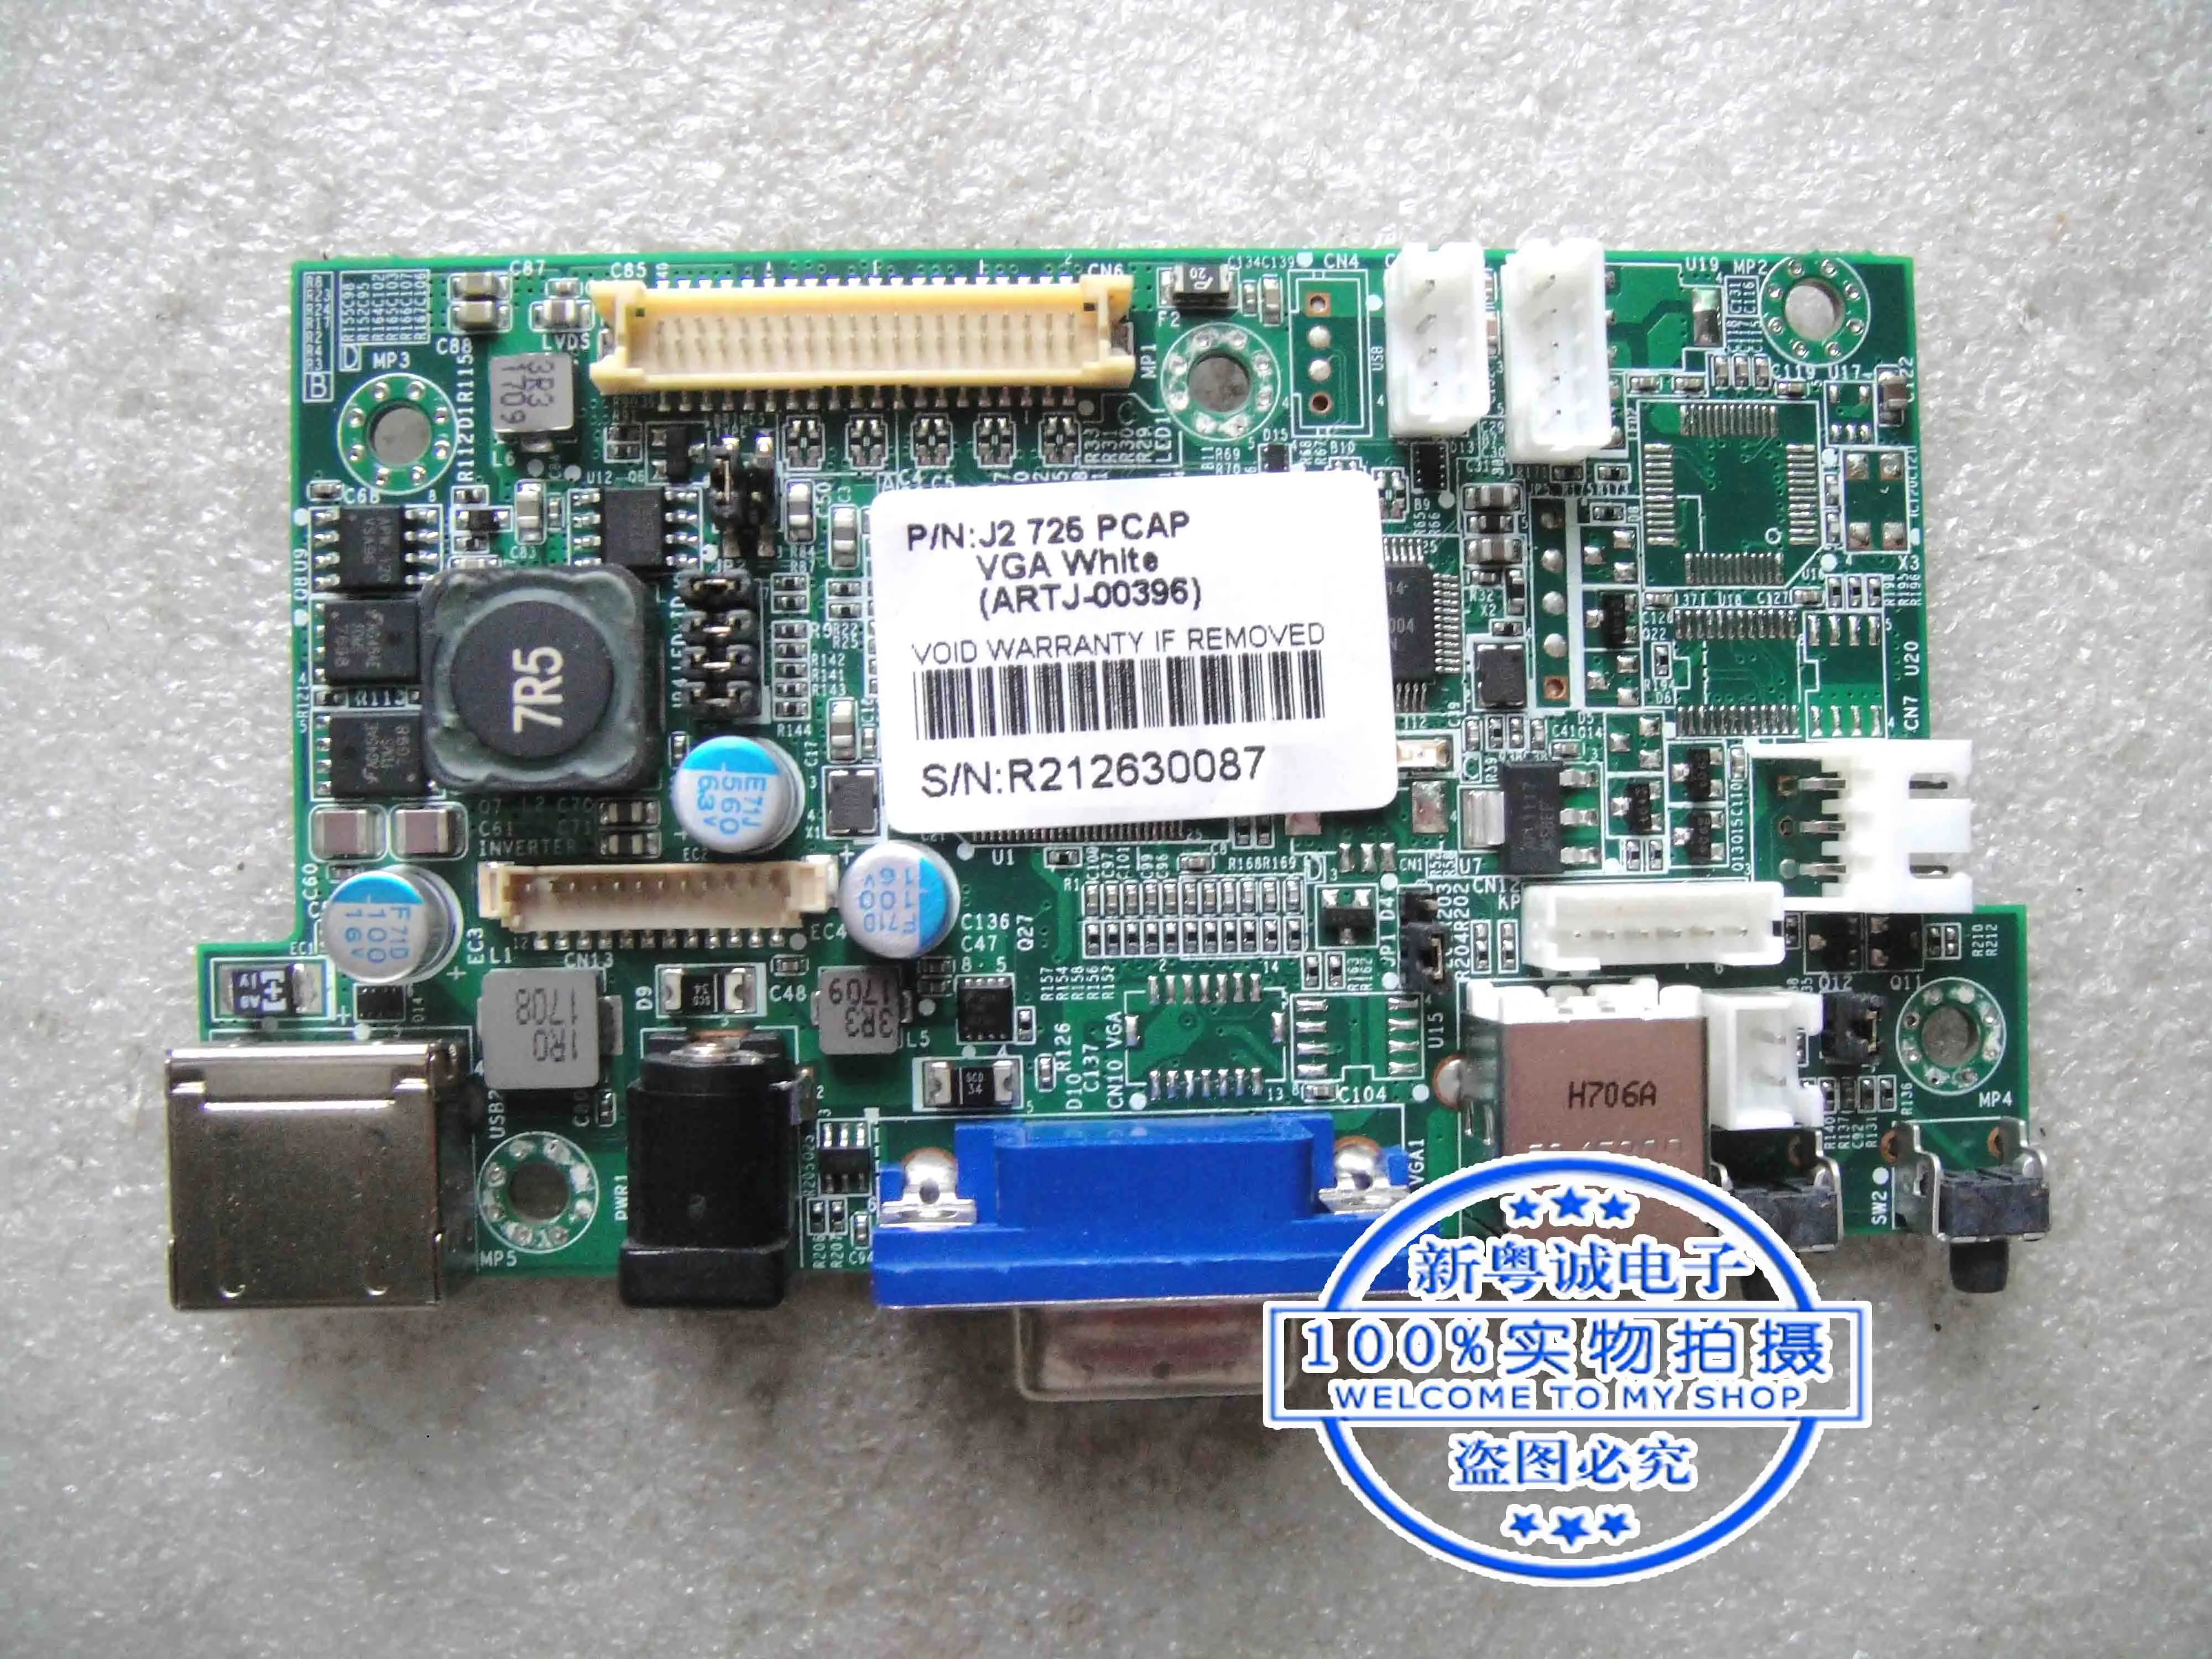 

J2 725 PCAP VGA White 3LEP18500080 driver board FT-160414 C11 V1.11